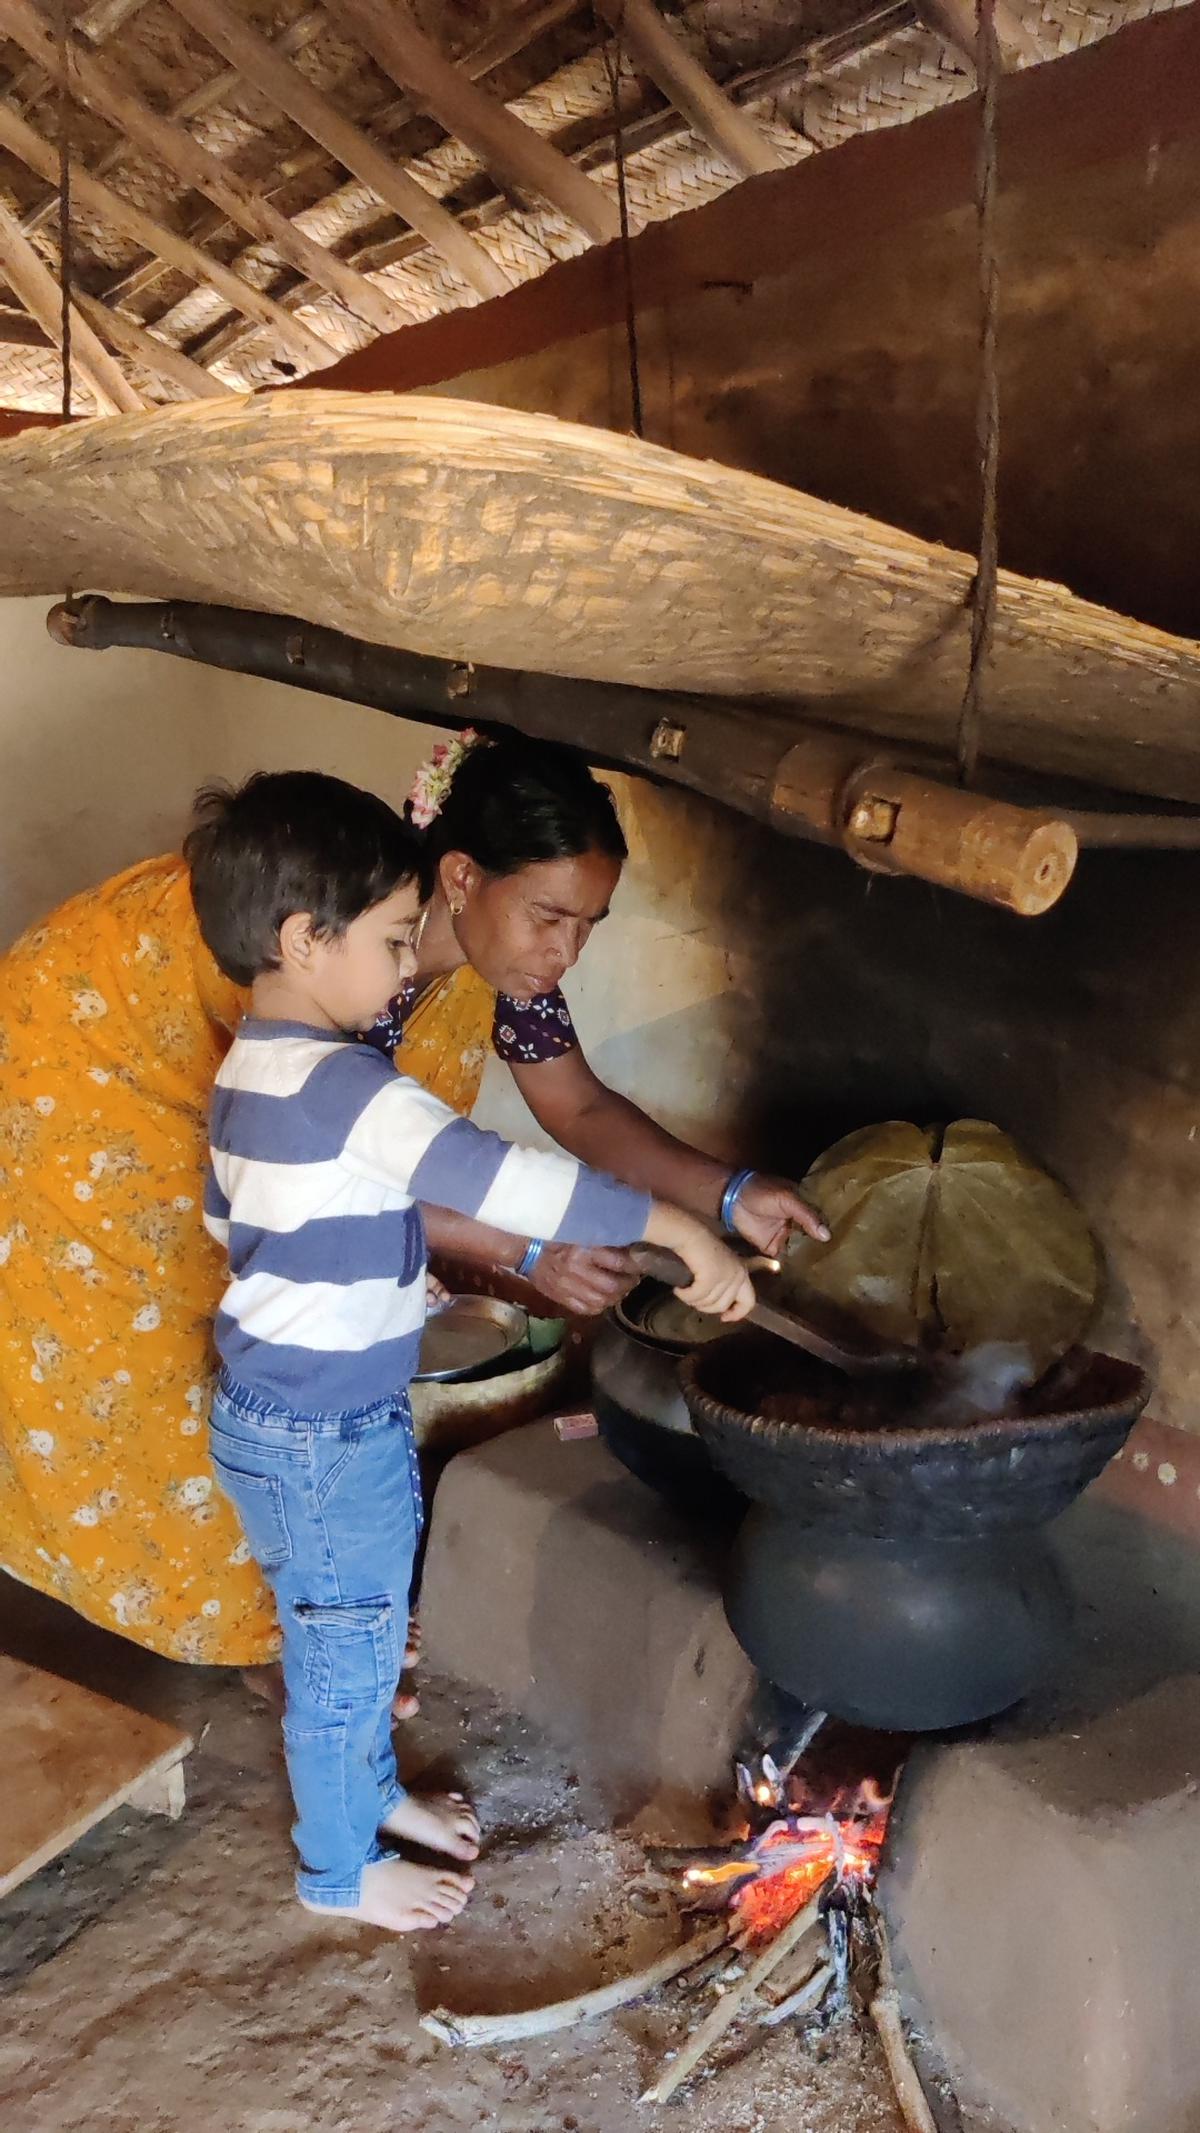 An adivasi woman helps a boy to cook in traditional style at Giri Grama Darshini at Pedalabudu near Araku, 130 kilometres from Visakhapatnam.